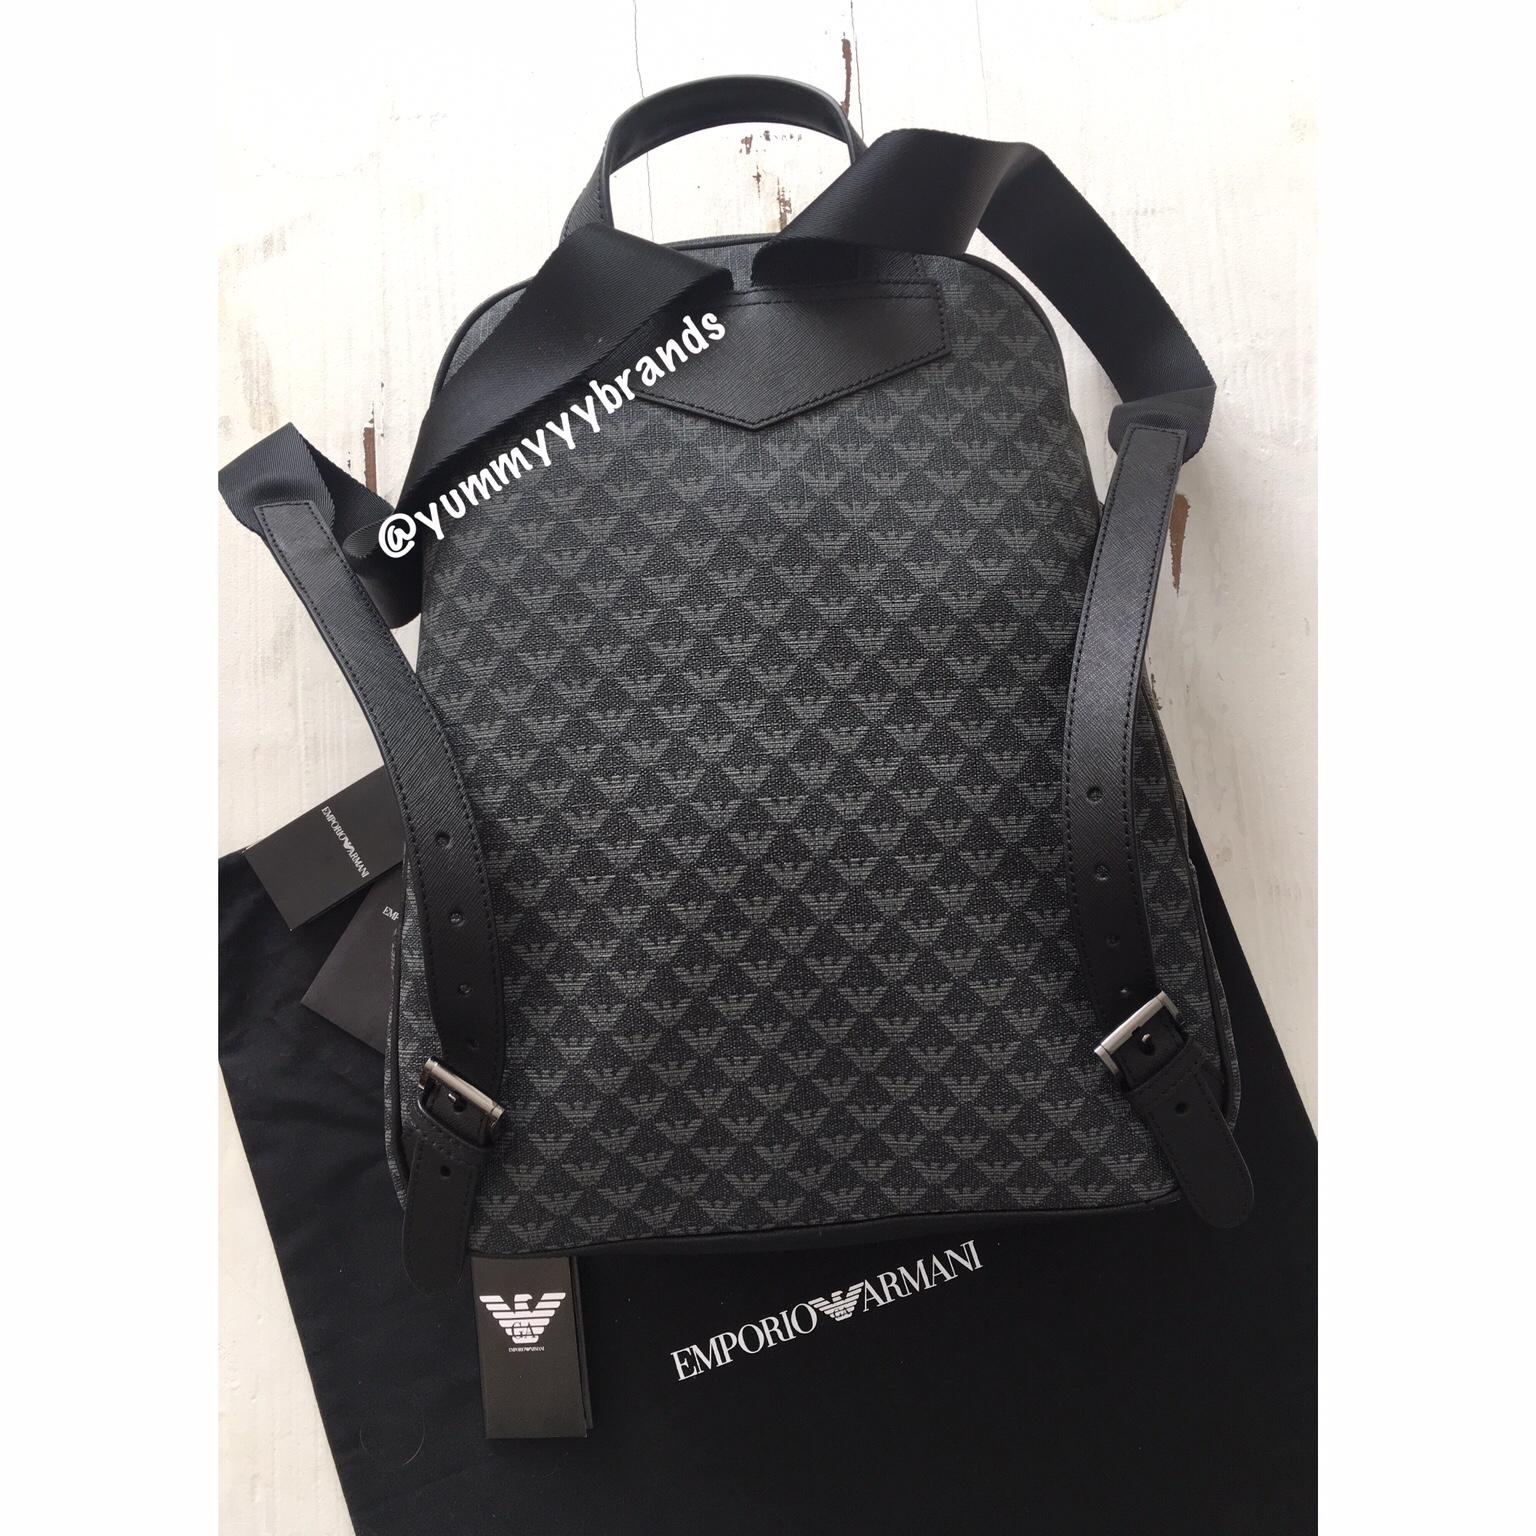 EMPORIO ARMANI rucksack/backpack 